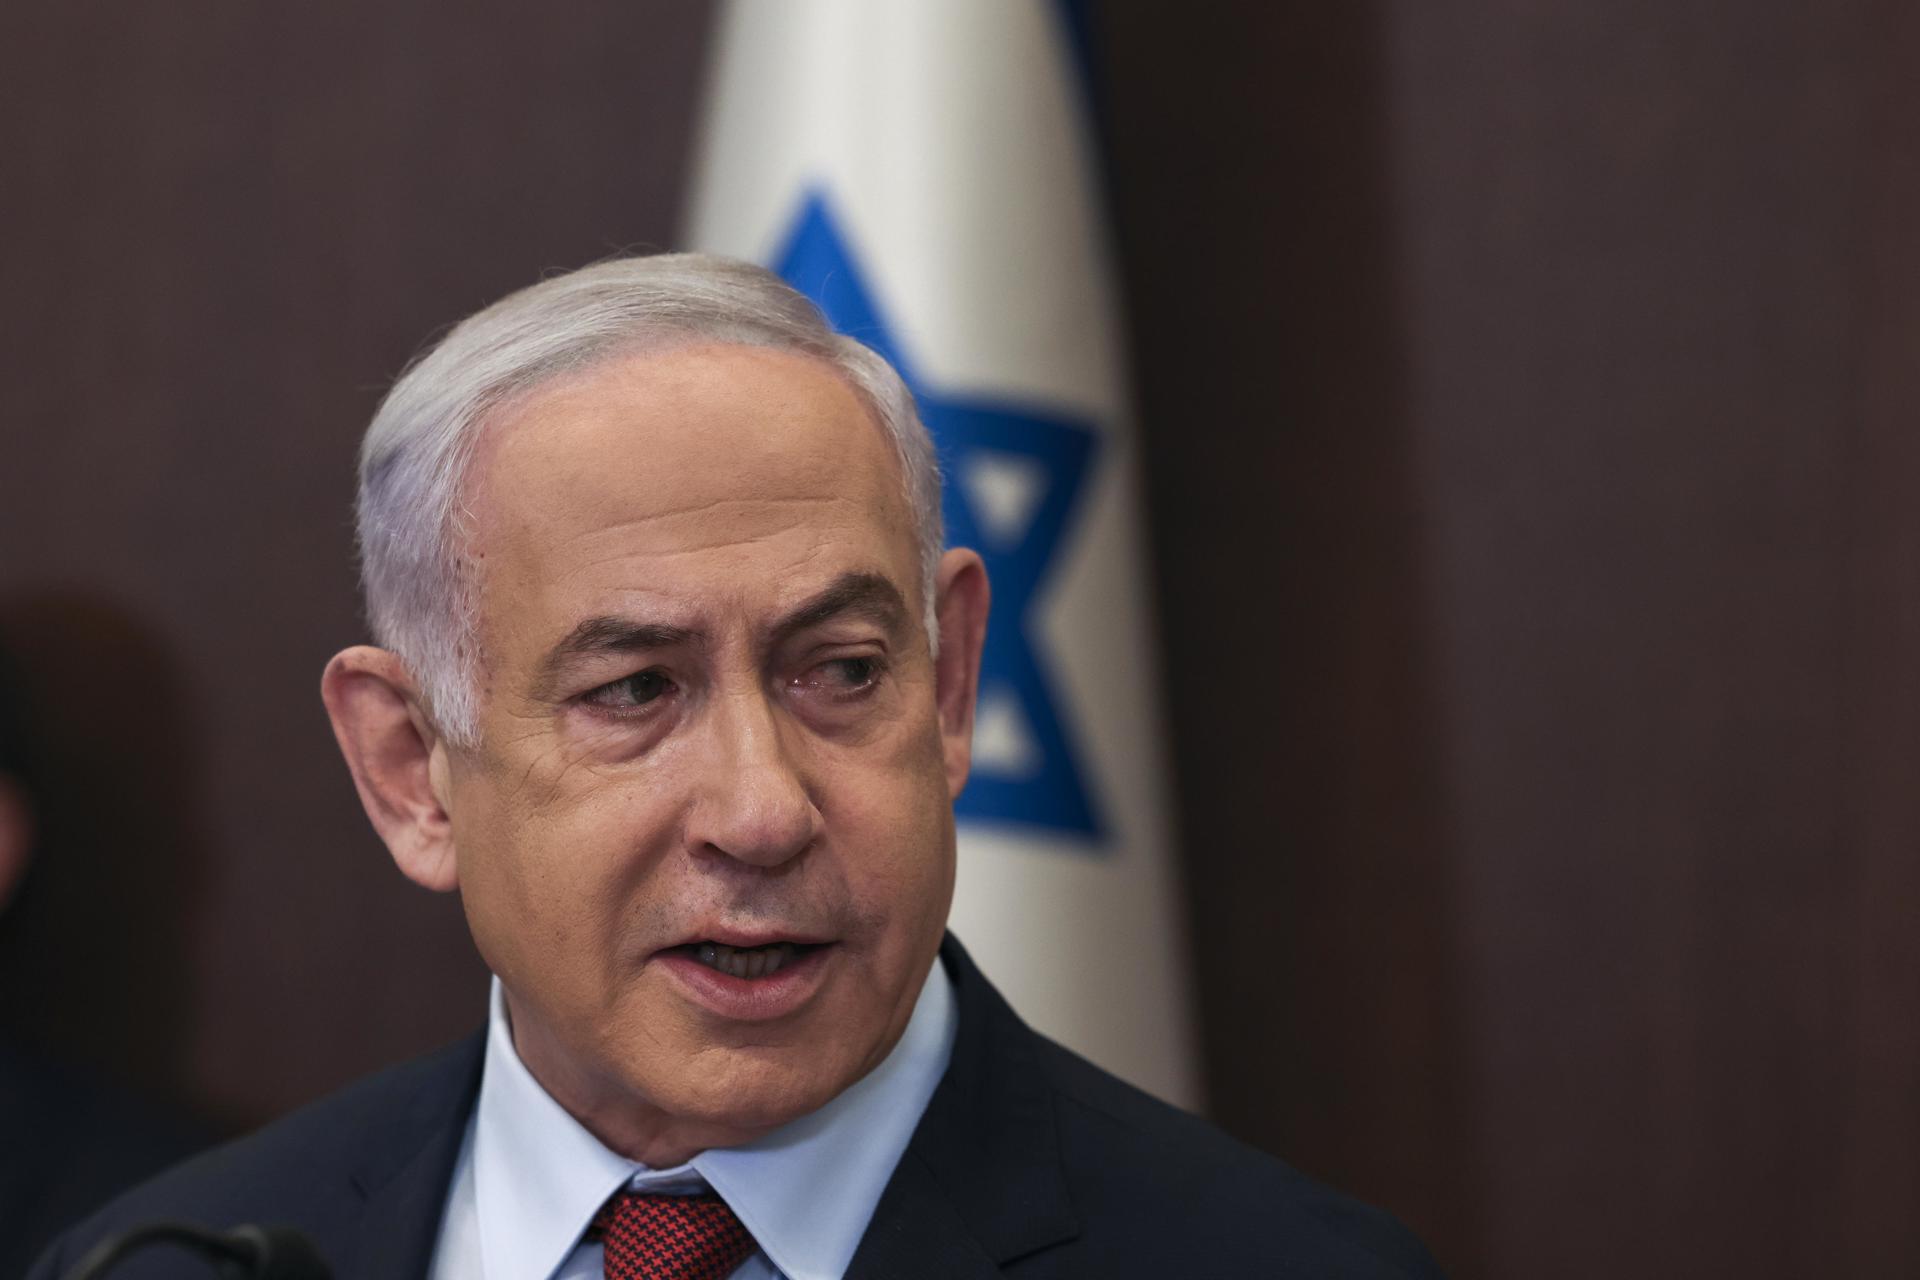 “Es momento de unir fuerzas”, afirmó Netanyahu tras renuncia del ministro Gantz